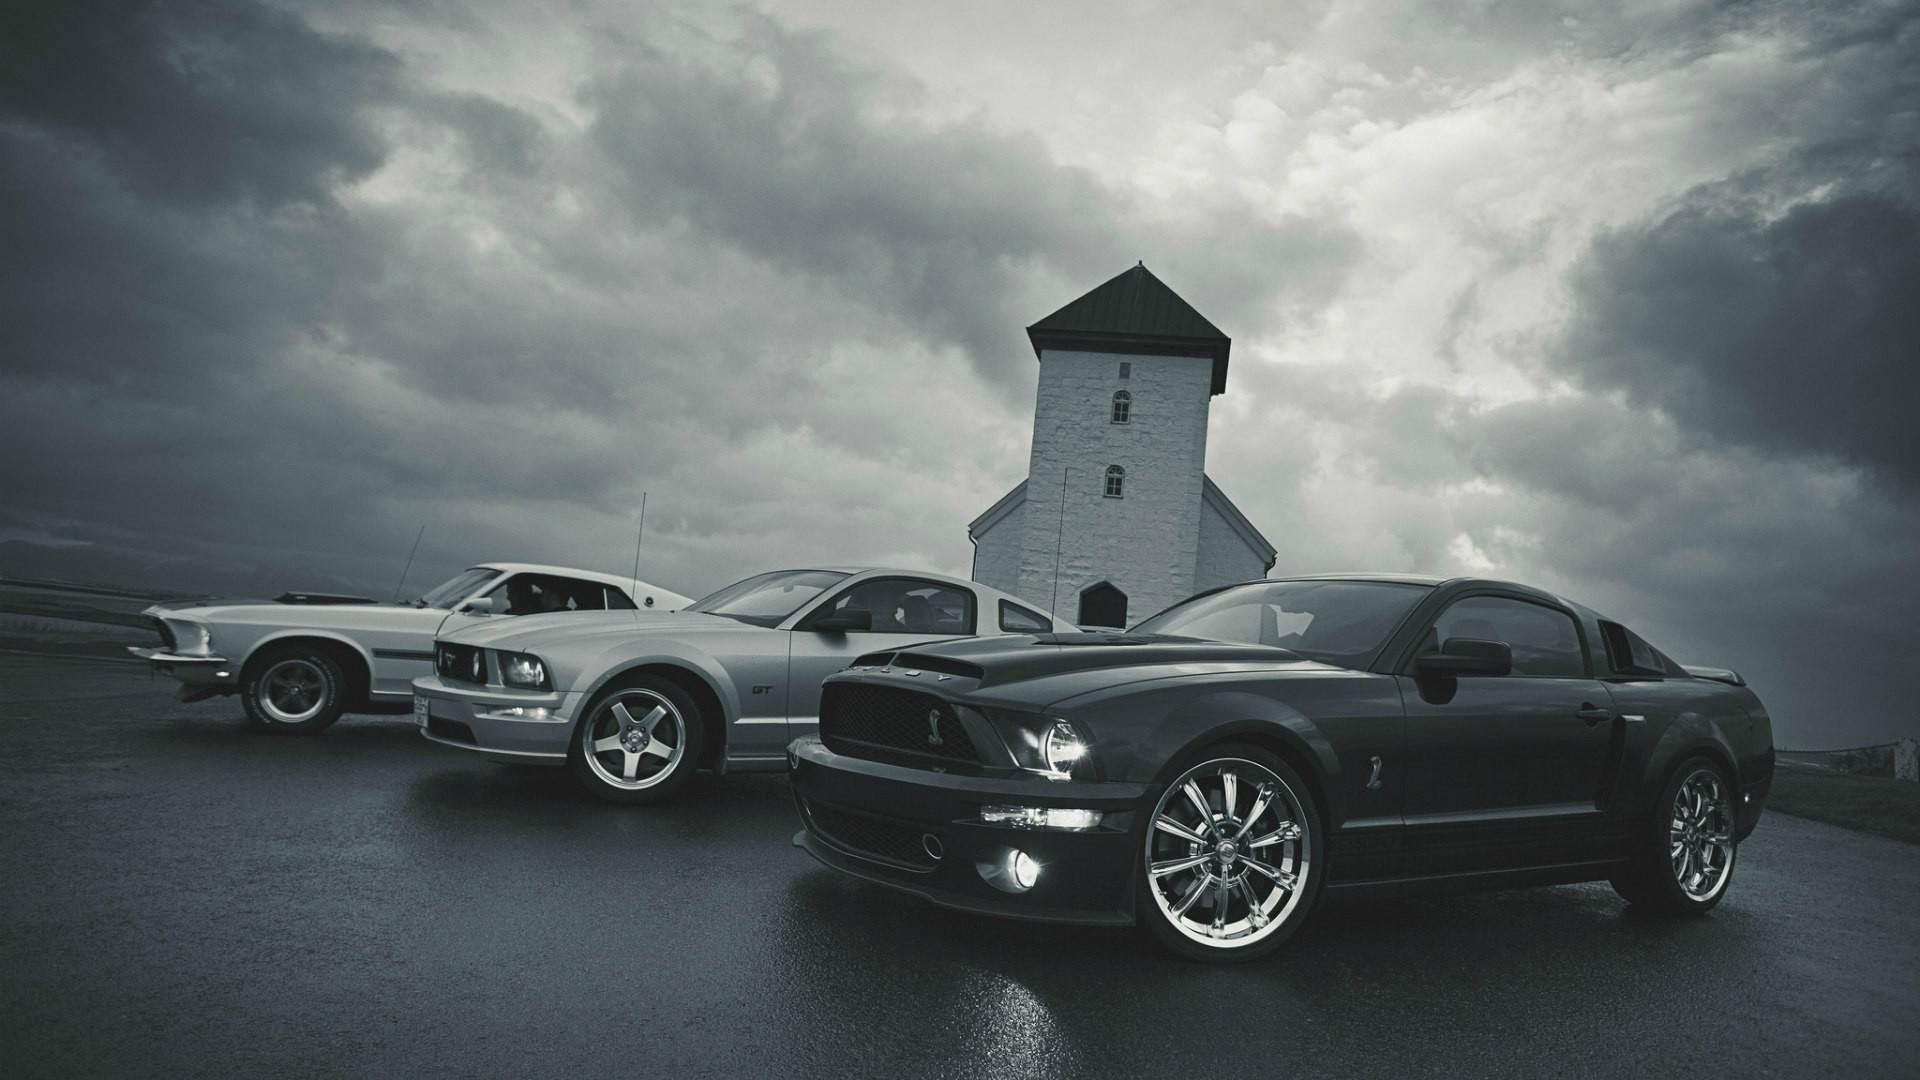 Mustang Desktop Wallpaper